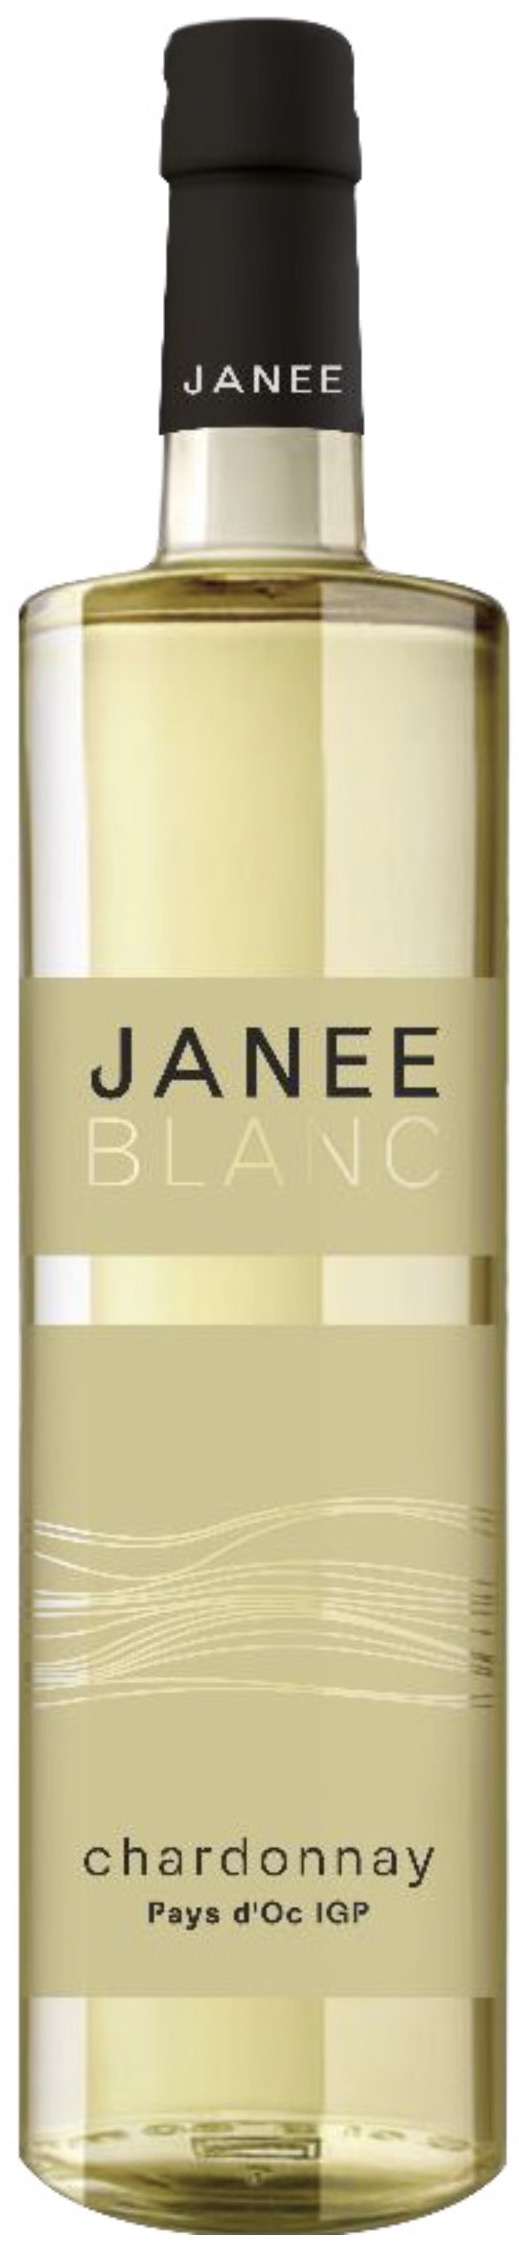 Janee Chardonnay halbtrocken 12,5% vol. 0,75L